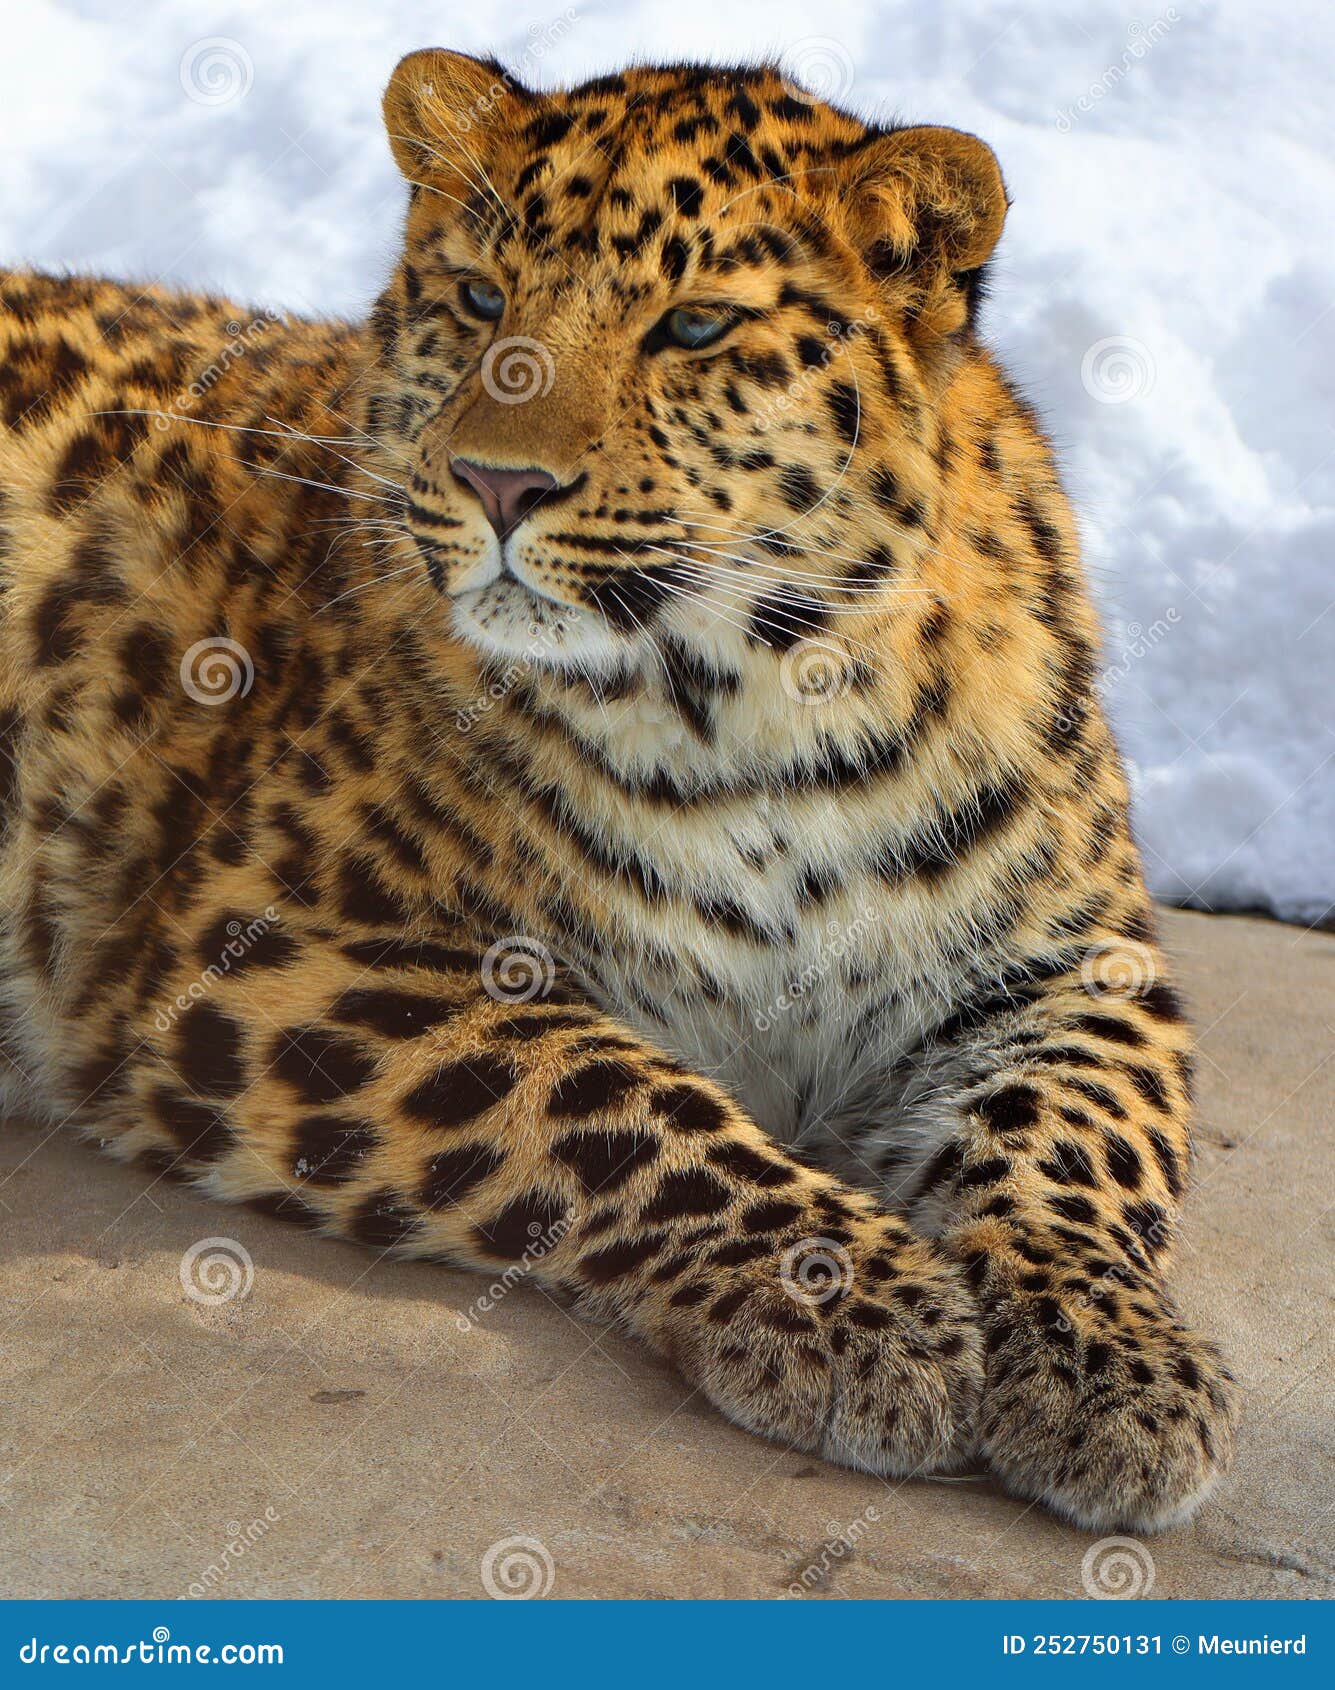 amur leopard is a leopard subspecies